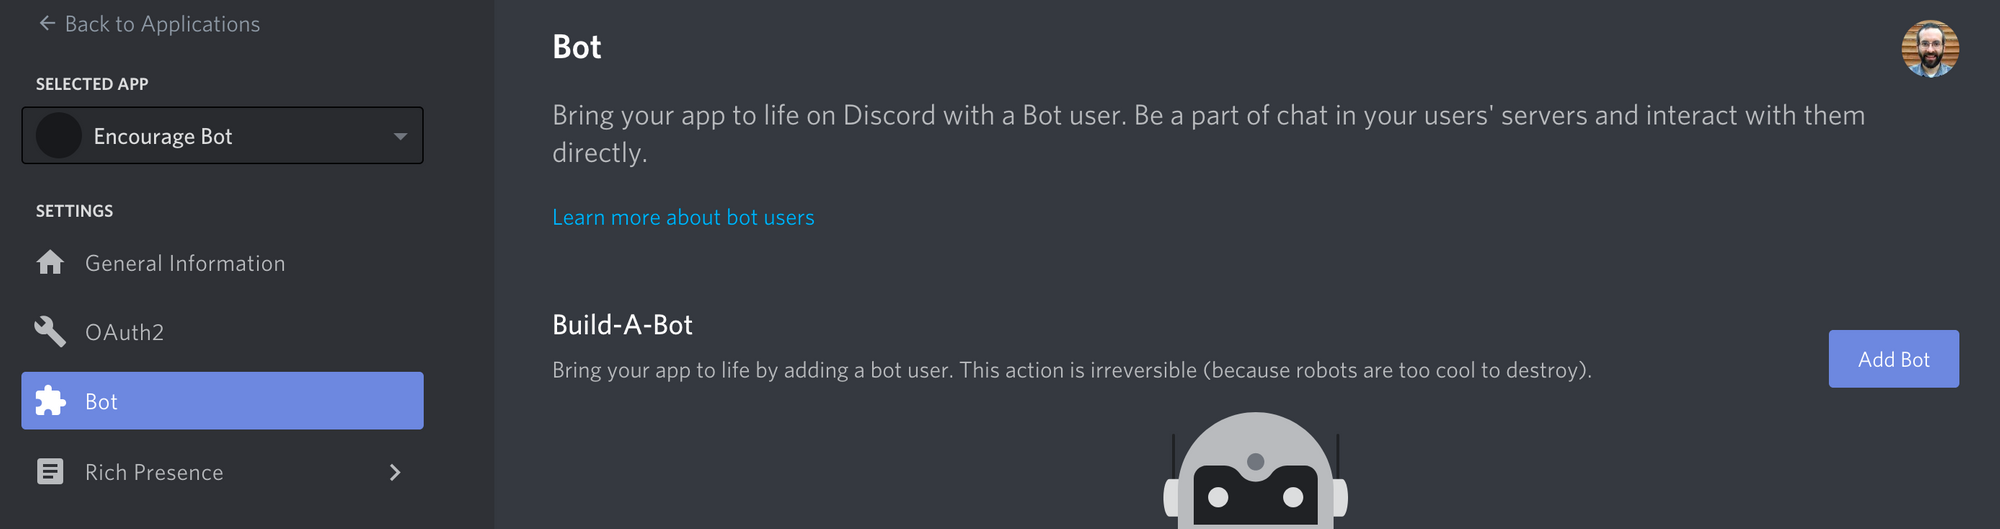 create a custom, stylish discord bot for you